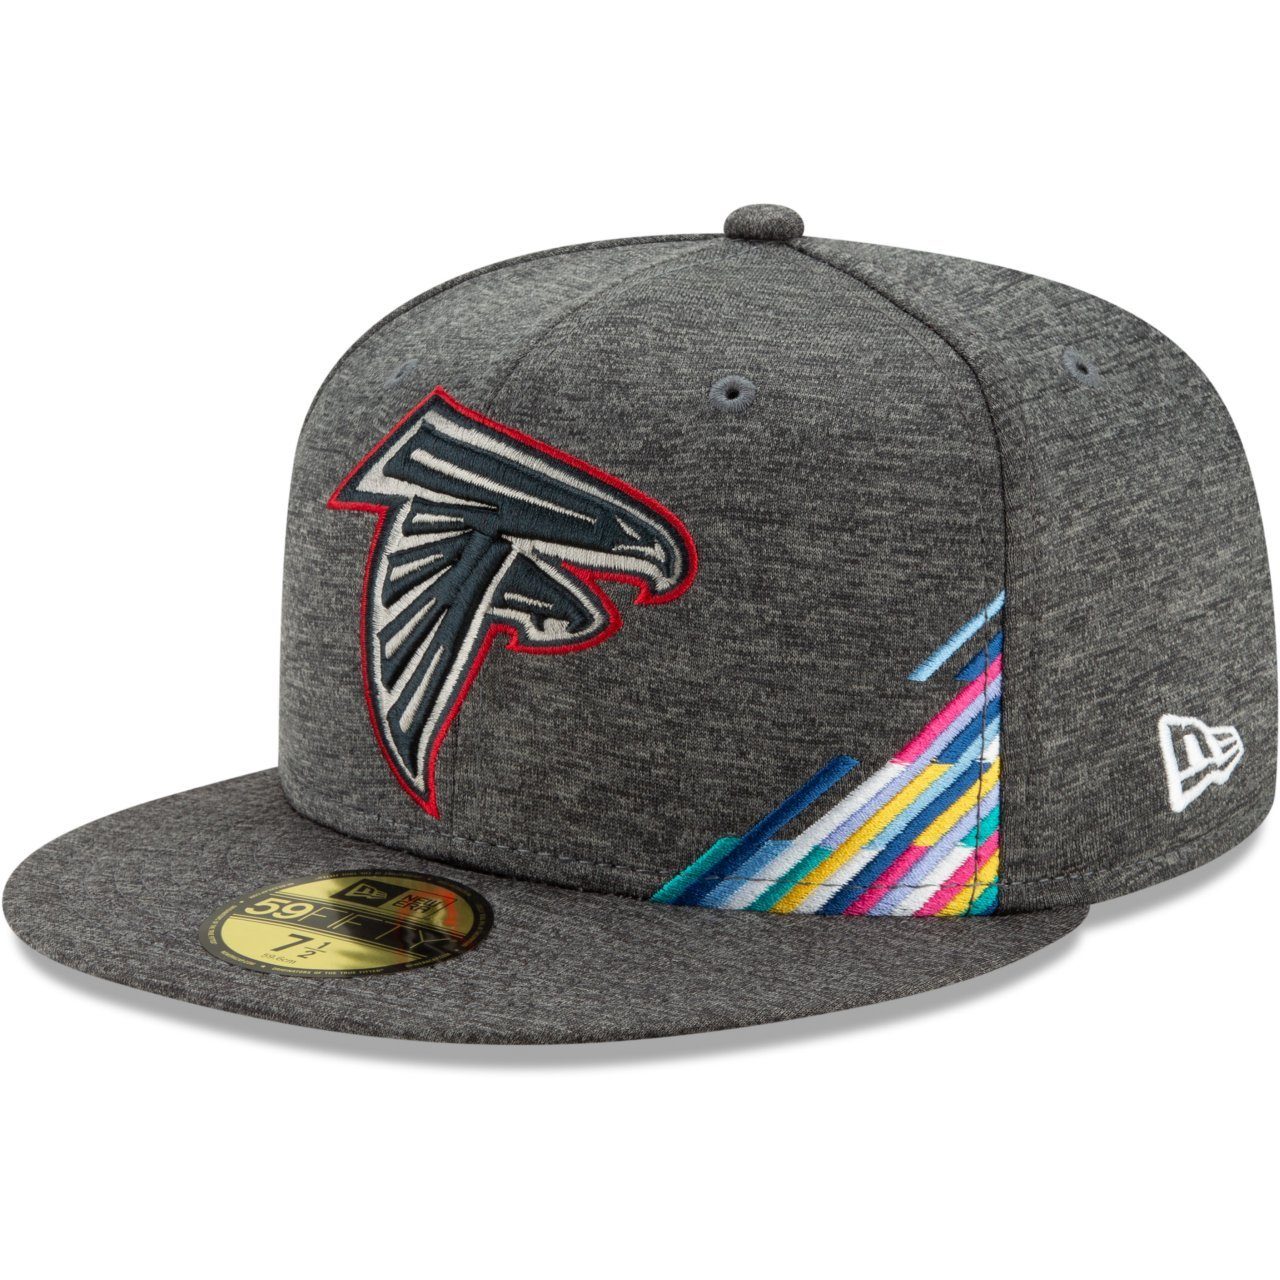 New Era Fitted Cap 59Fifty CRUCIAL CATCH NFL Teams Atlanta Falcons